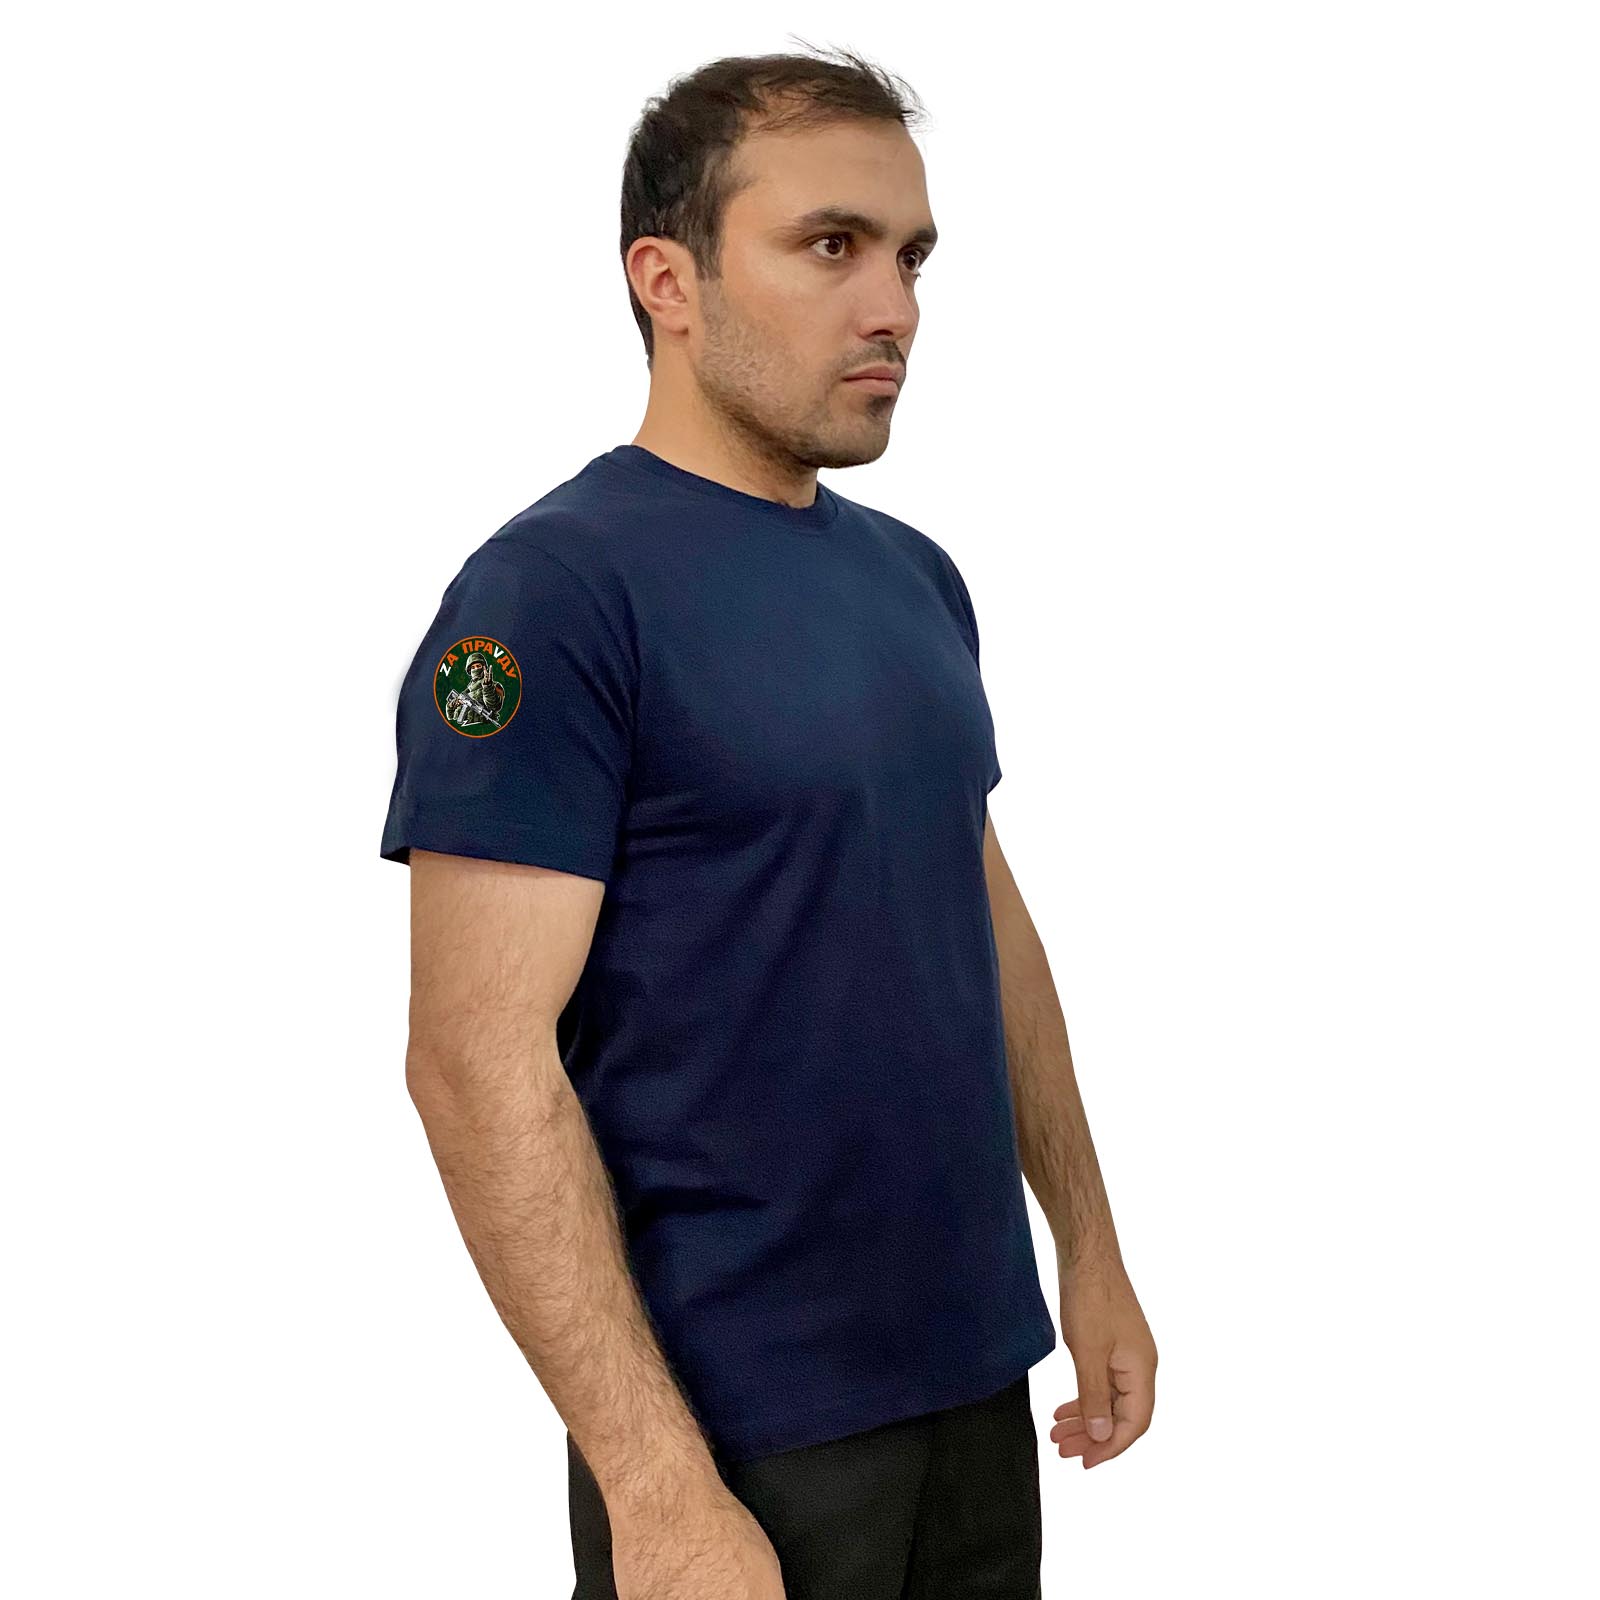 Тёмно-синяя футболка с термопринтом "Zа праVду" на рукаве